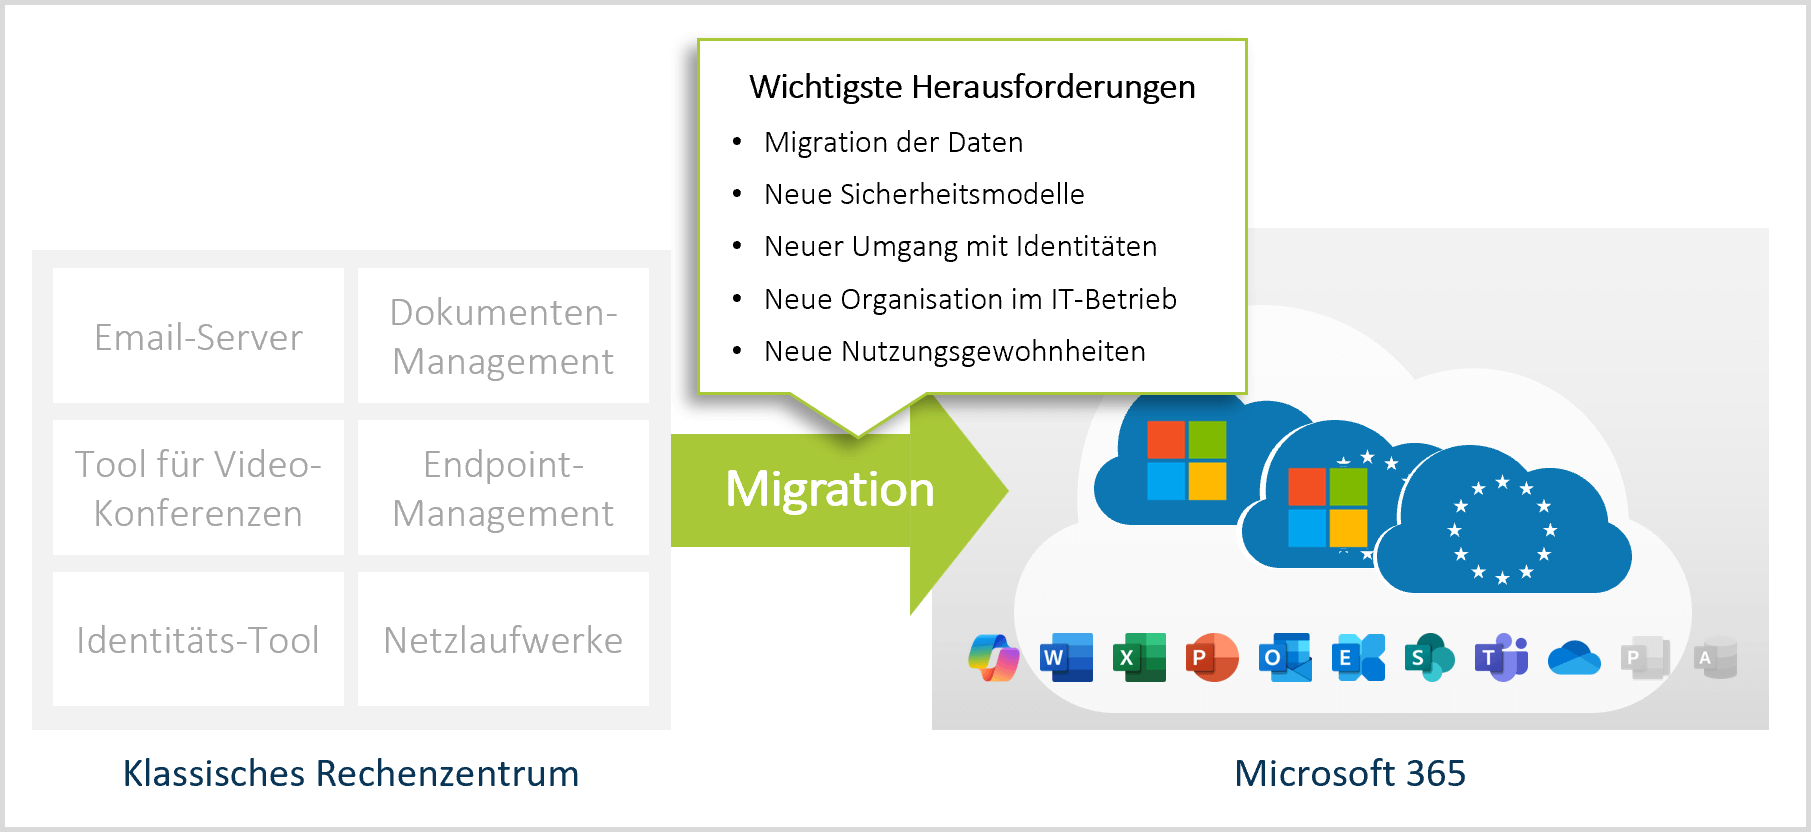 Migration zu Microsoft 365